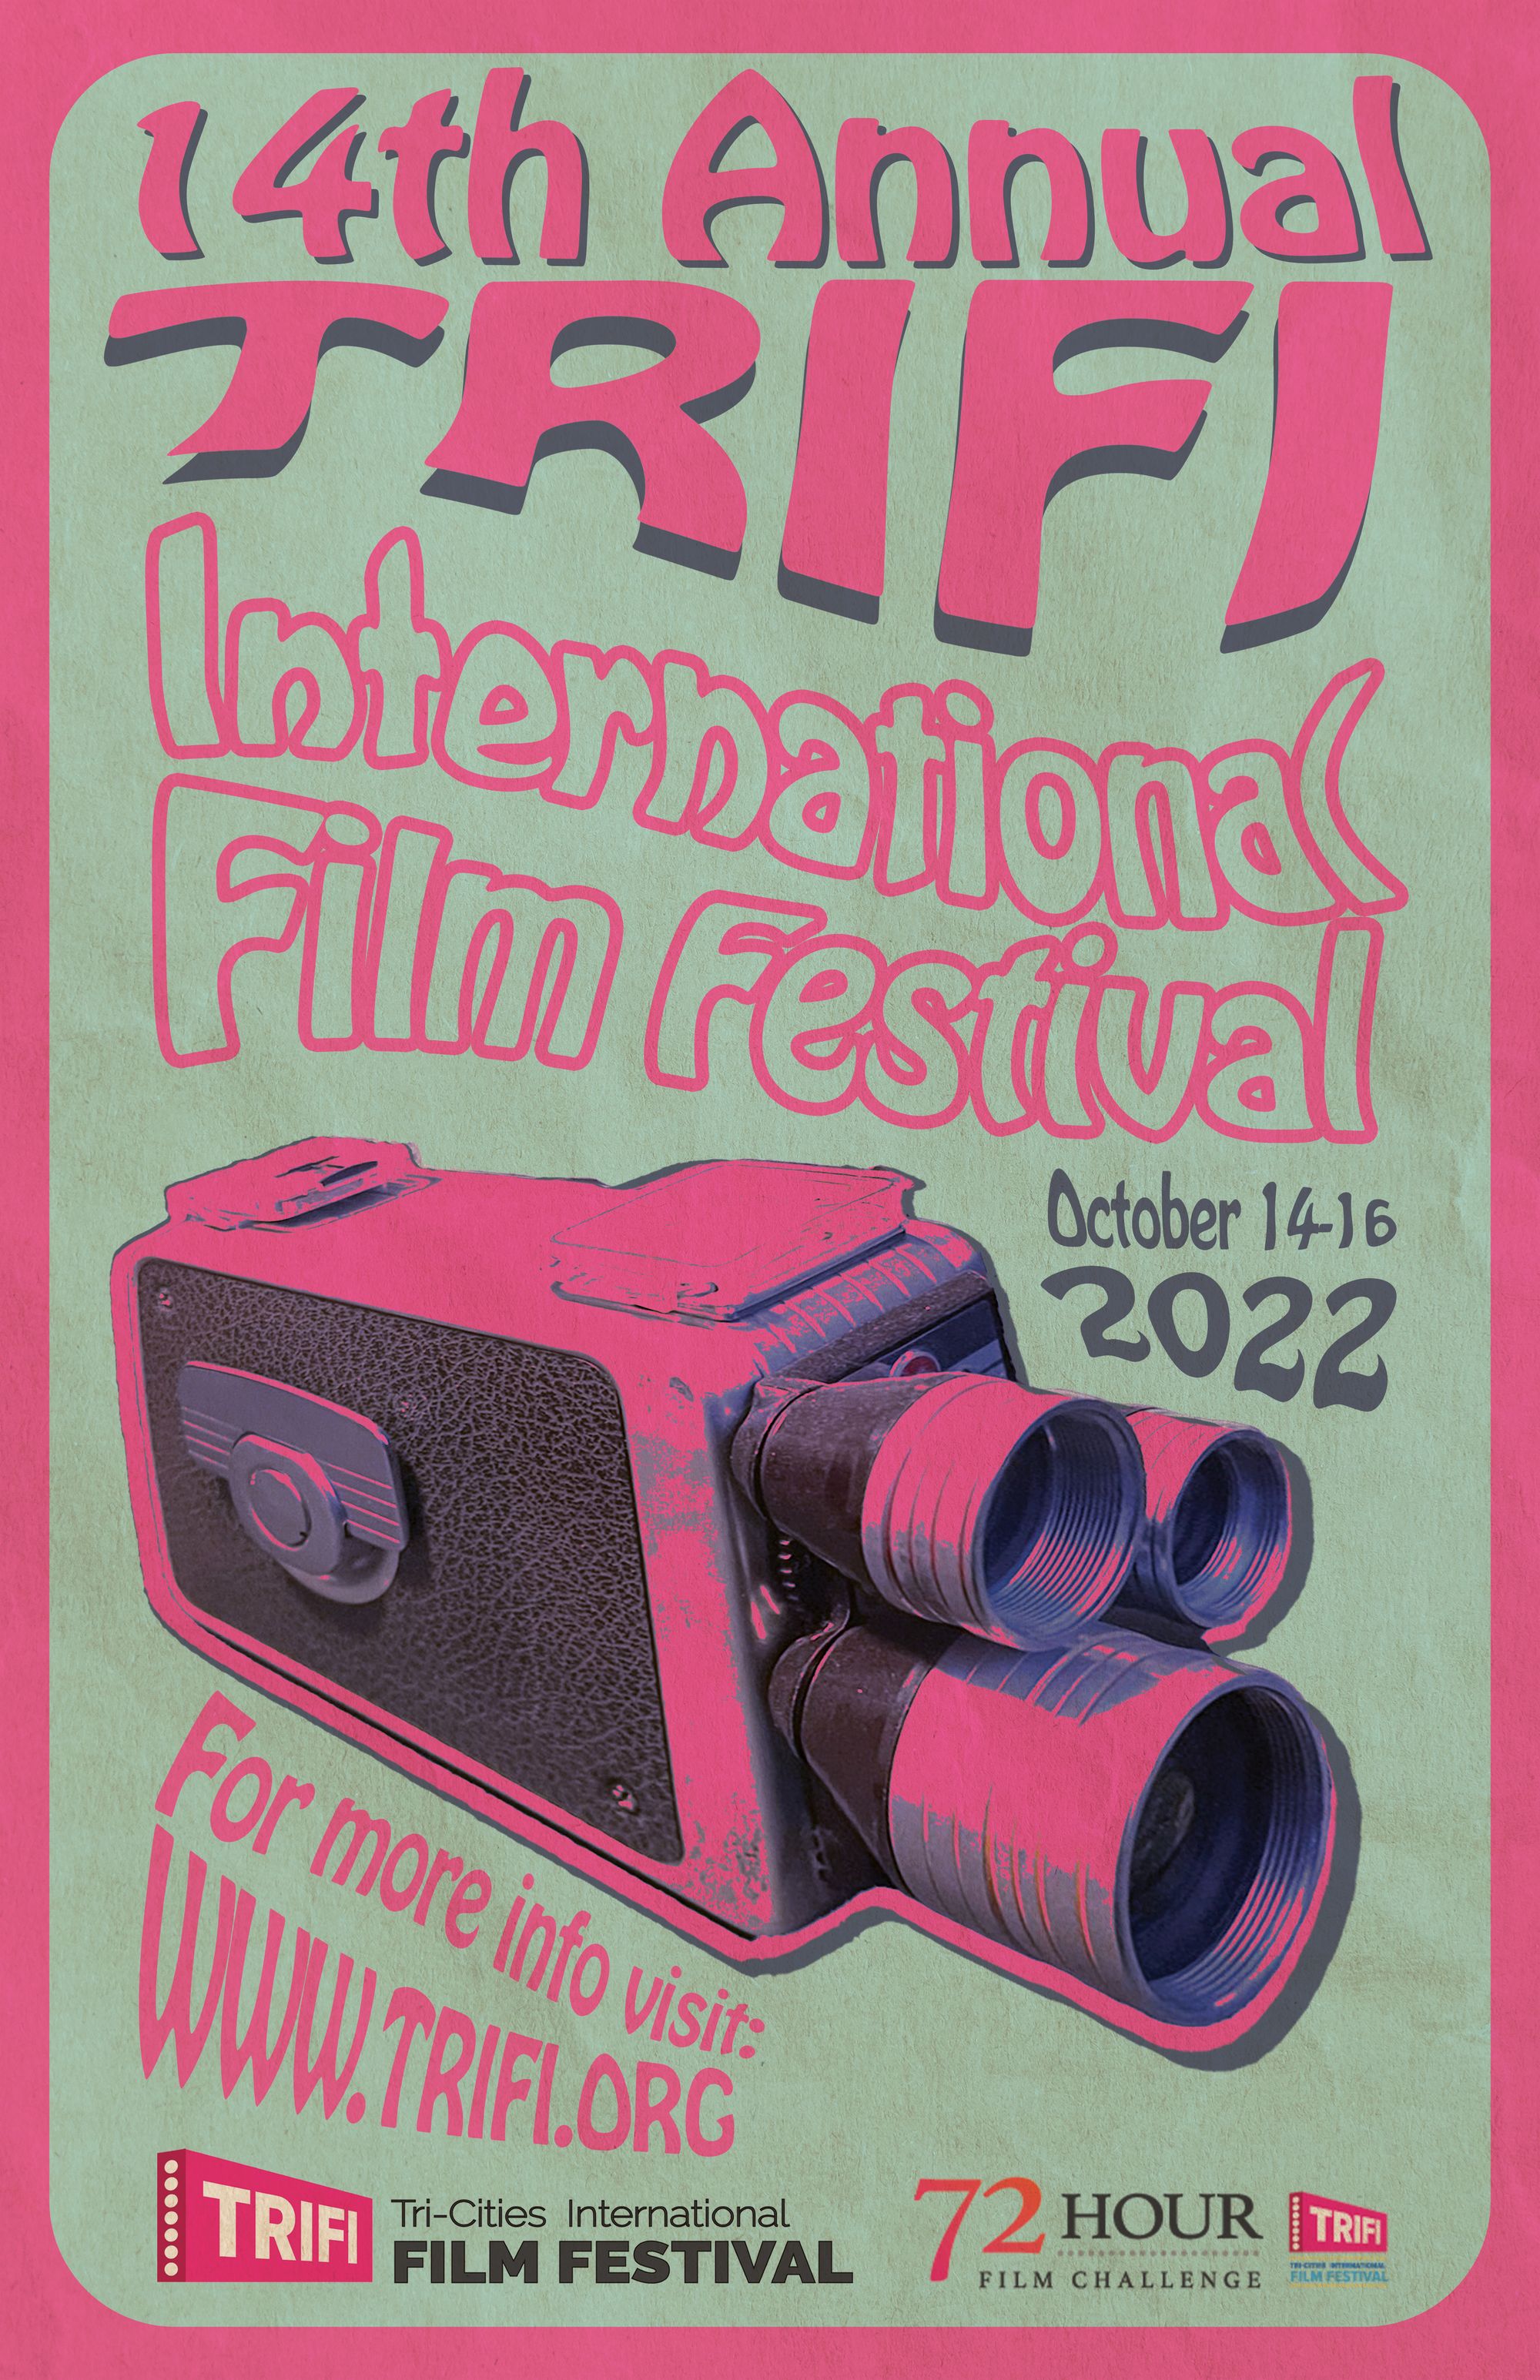 14th Annual TRIFI International Film Festival, Oct 14-16 2022